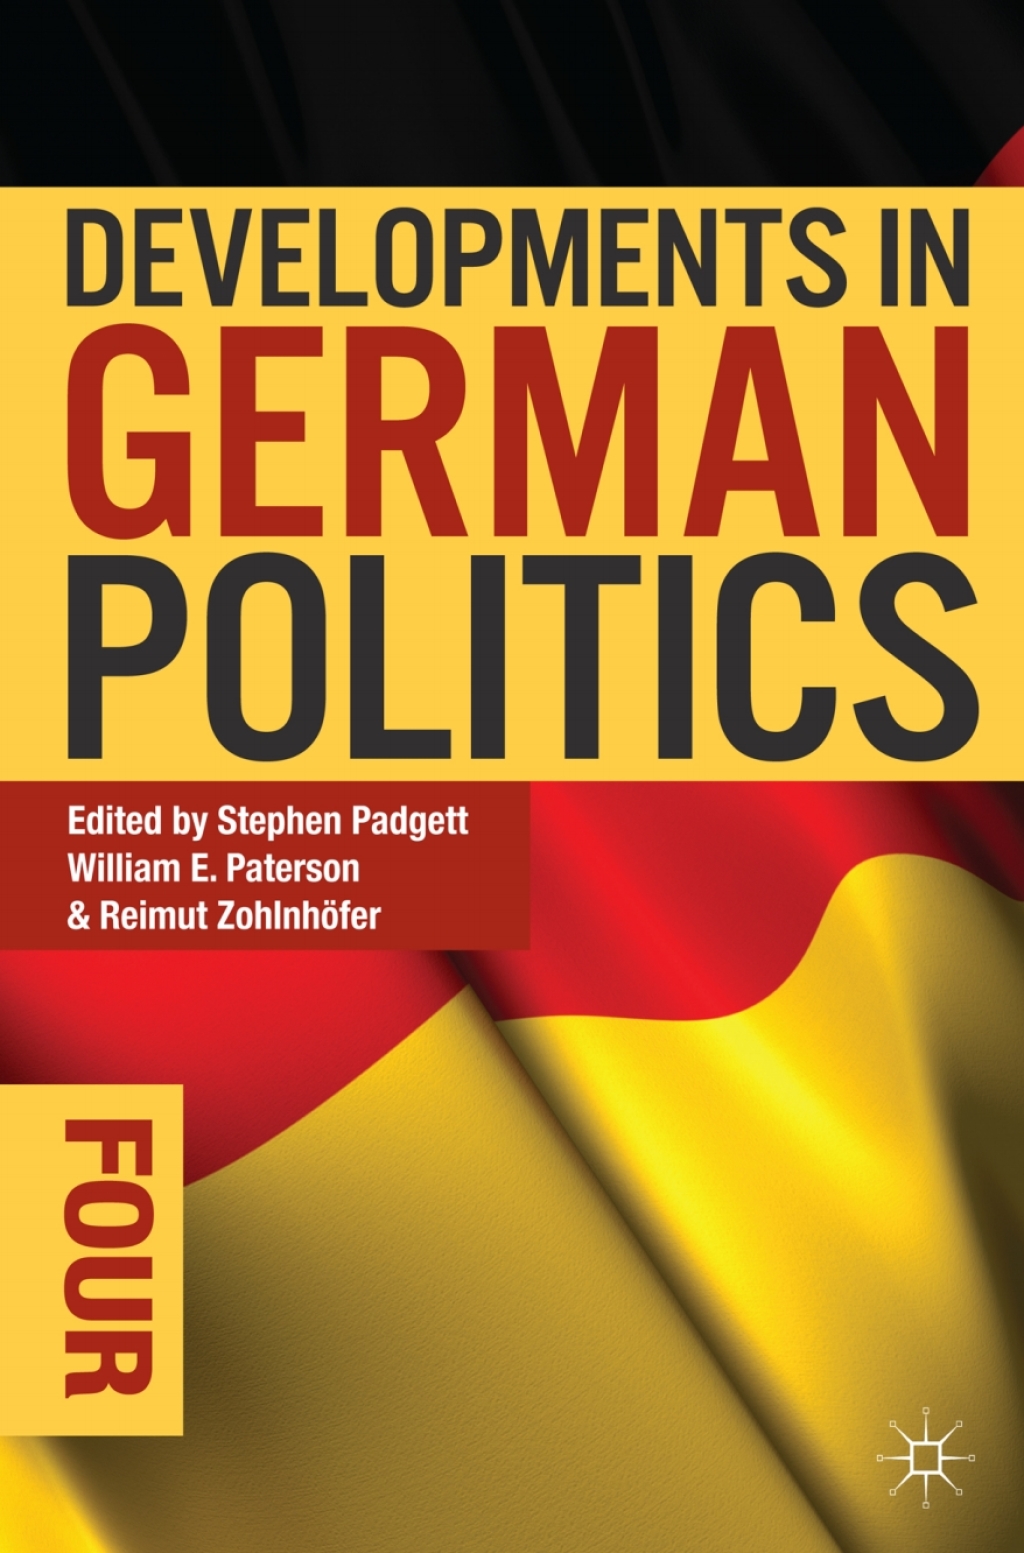 Developments in German Politics 4 (eBook Rental)